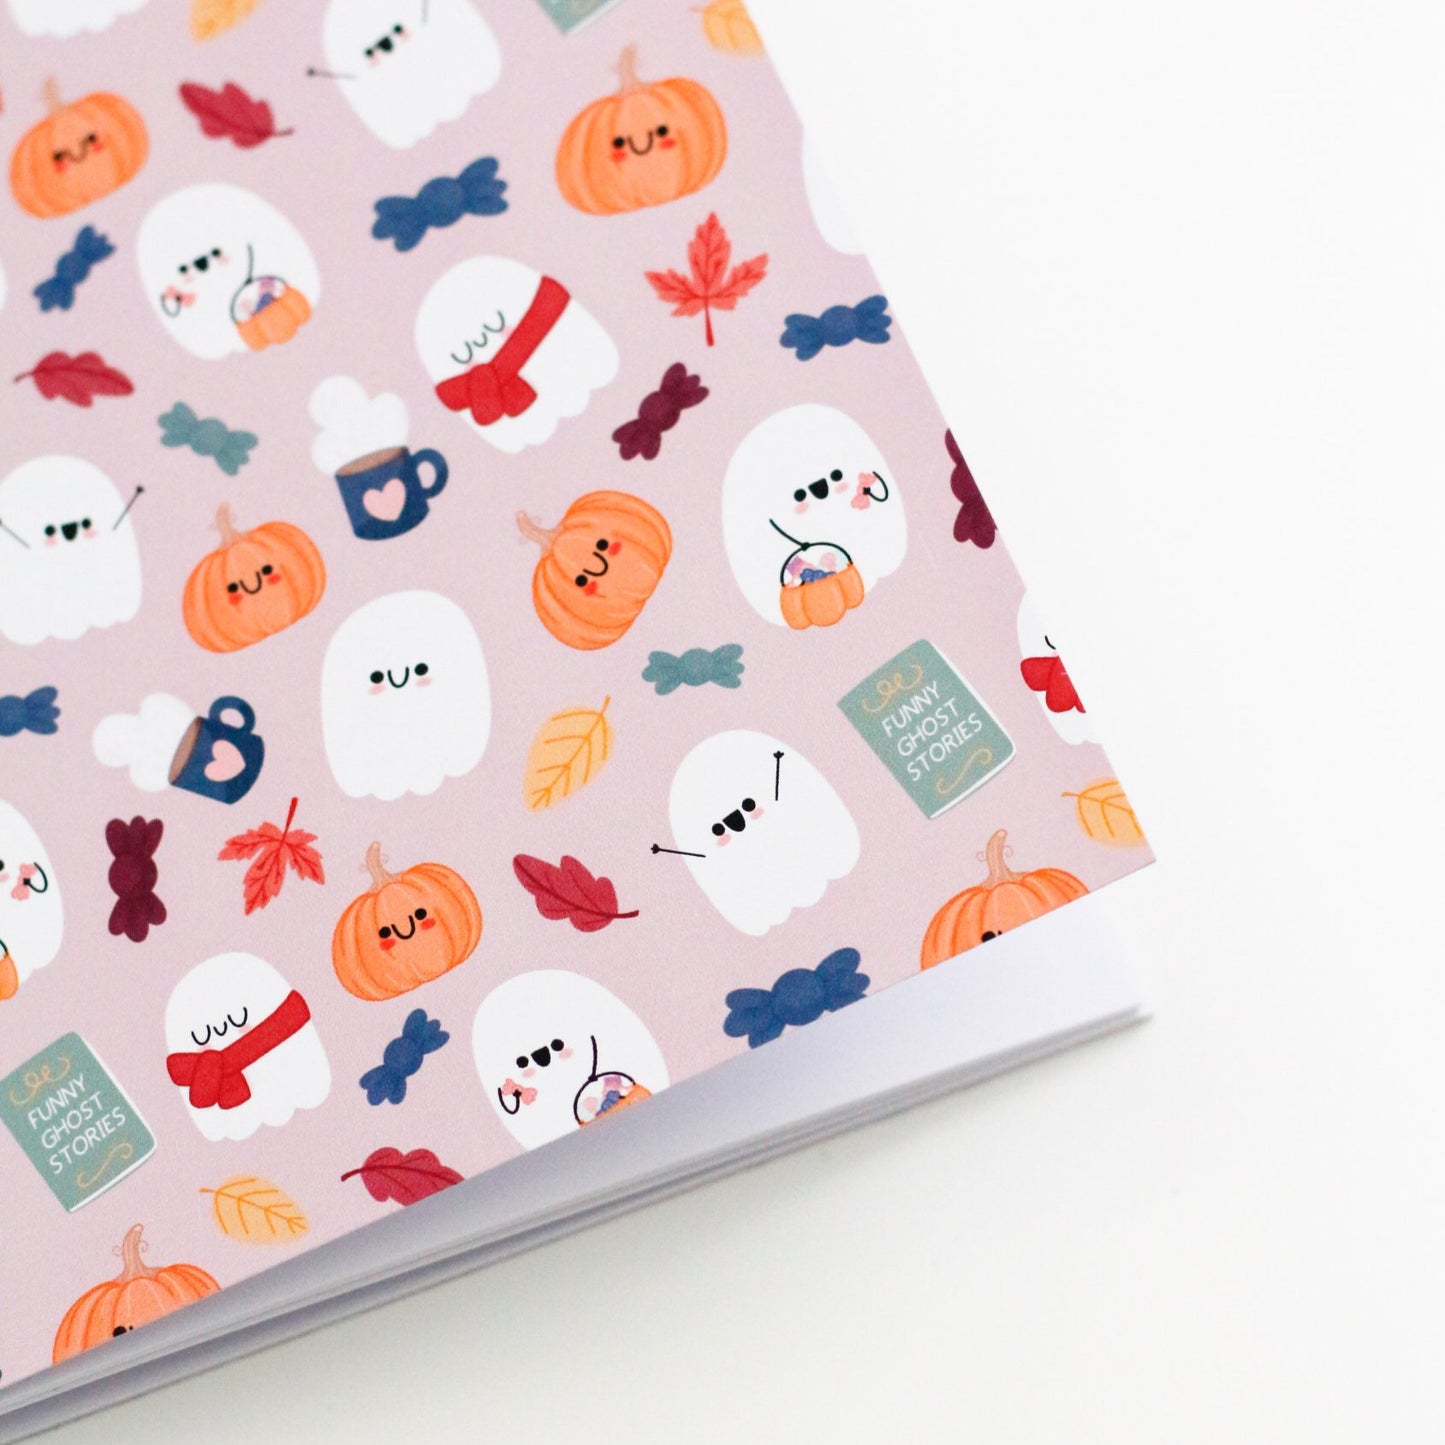 Ghosty's Fall Notebook - Cute notebooks